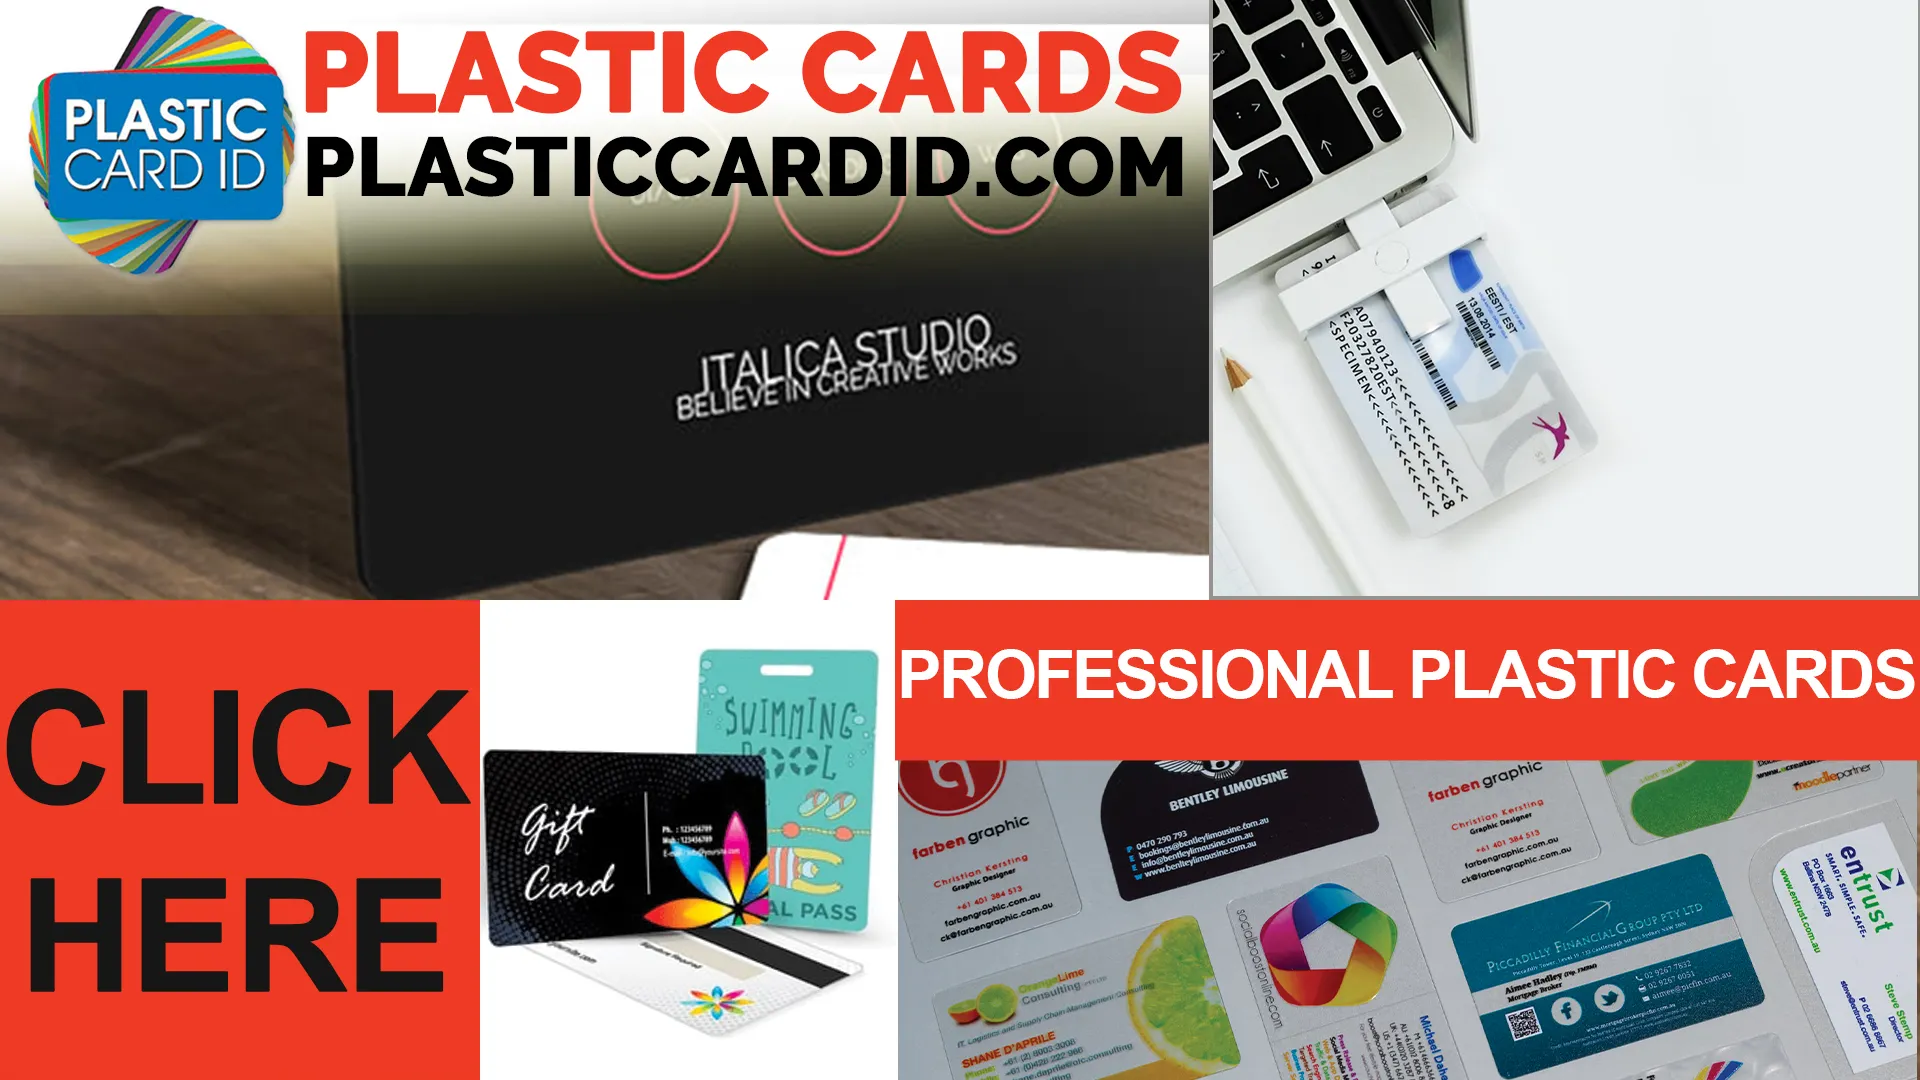 Diverse Range of Plastic Card Applications